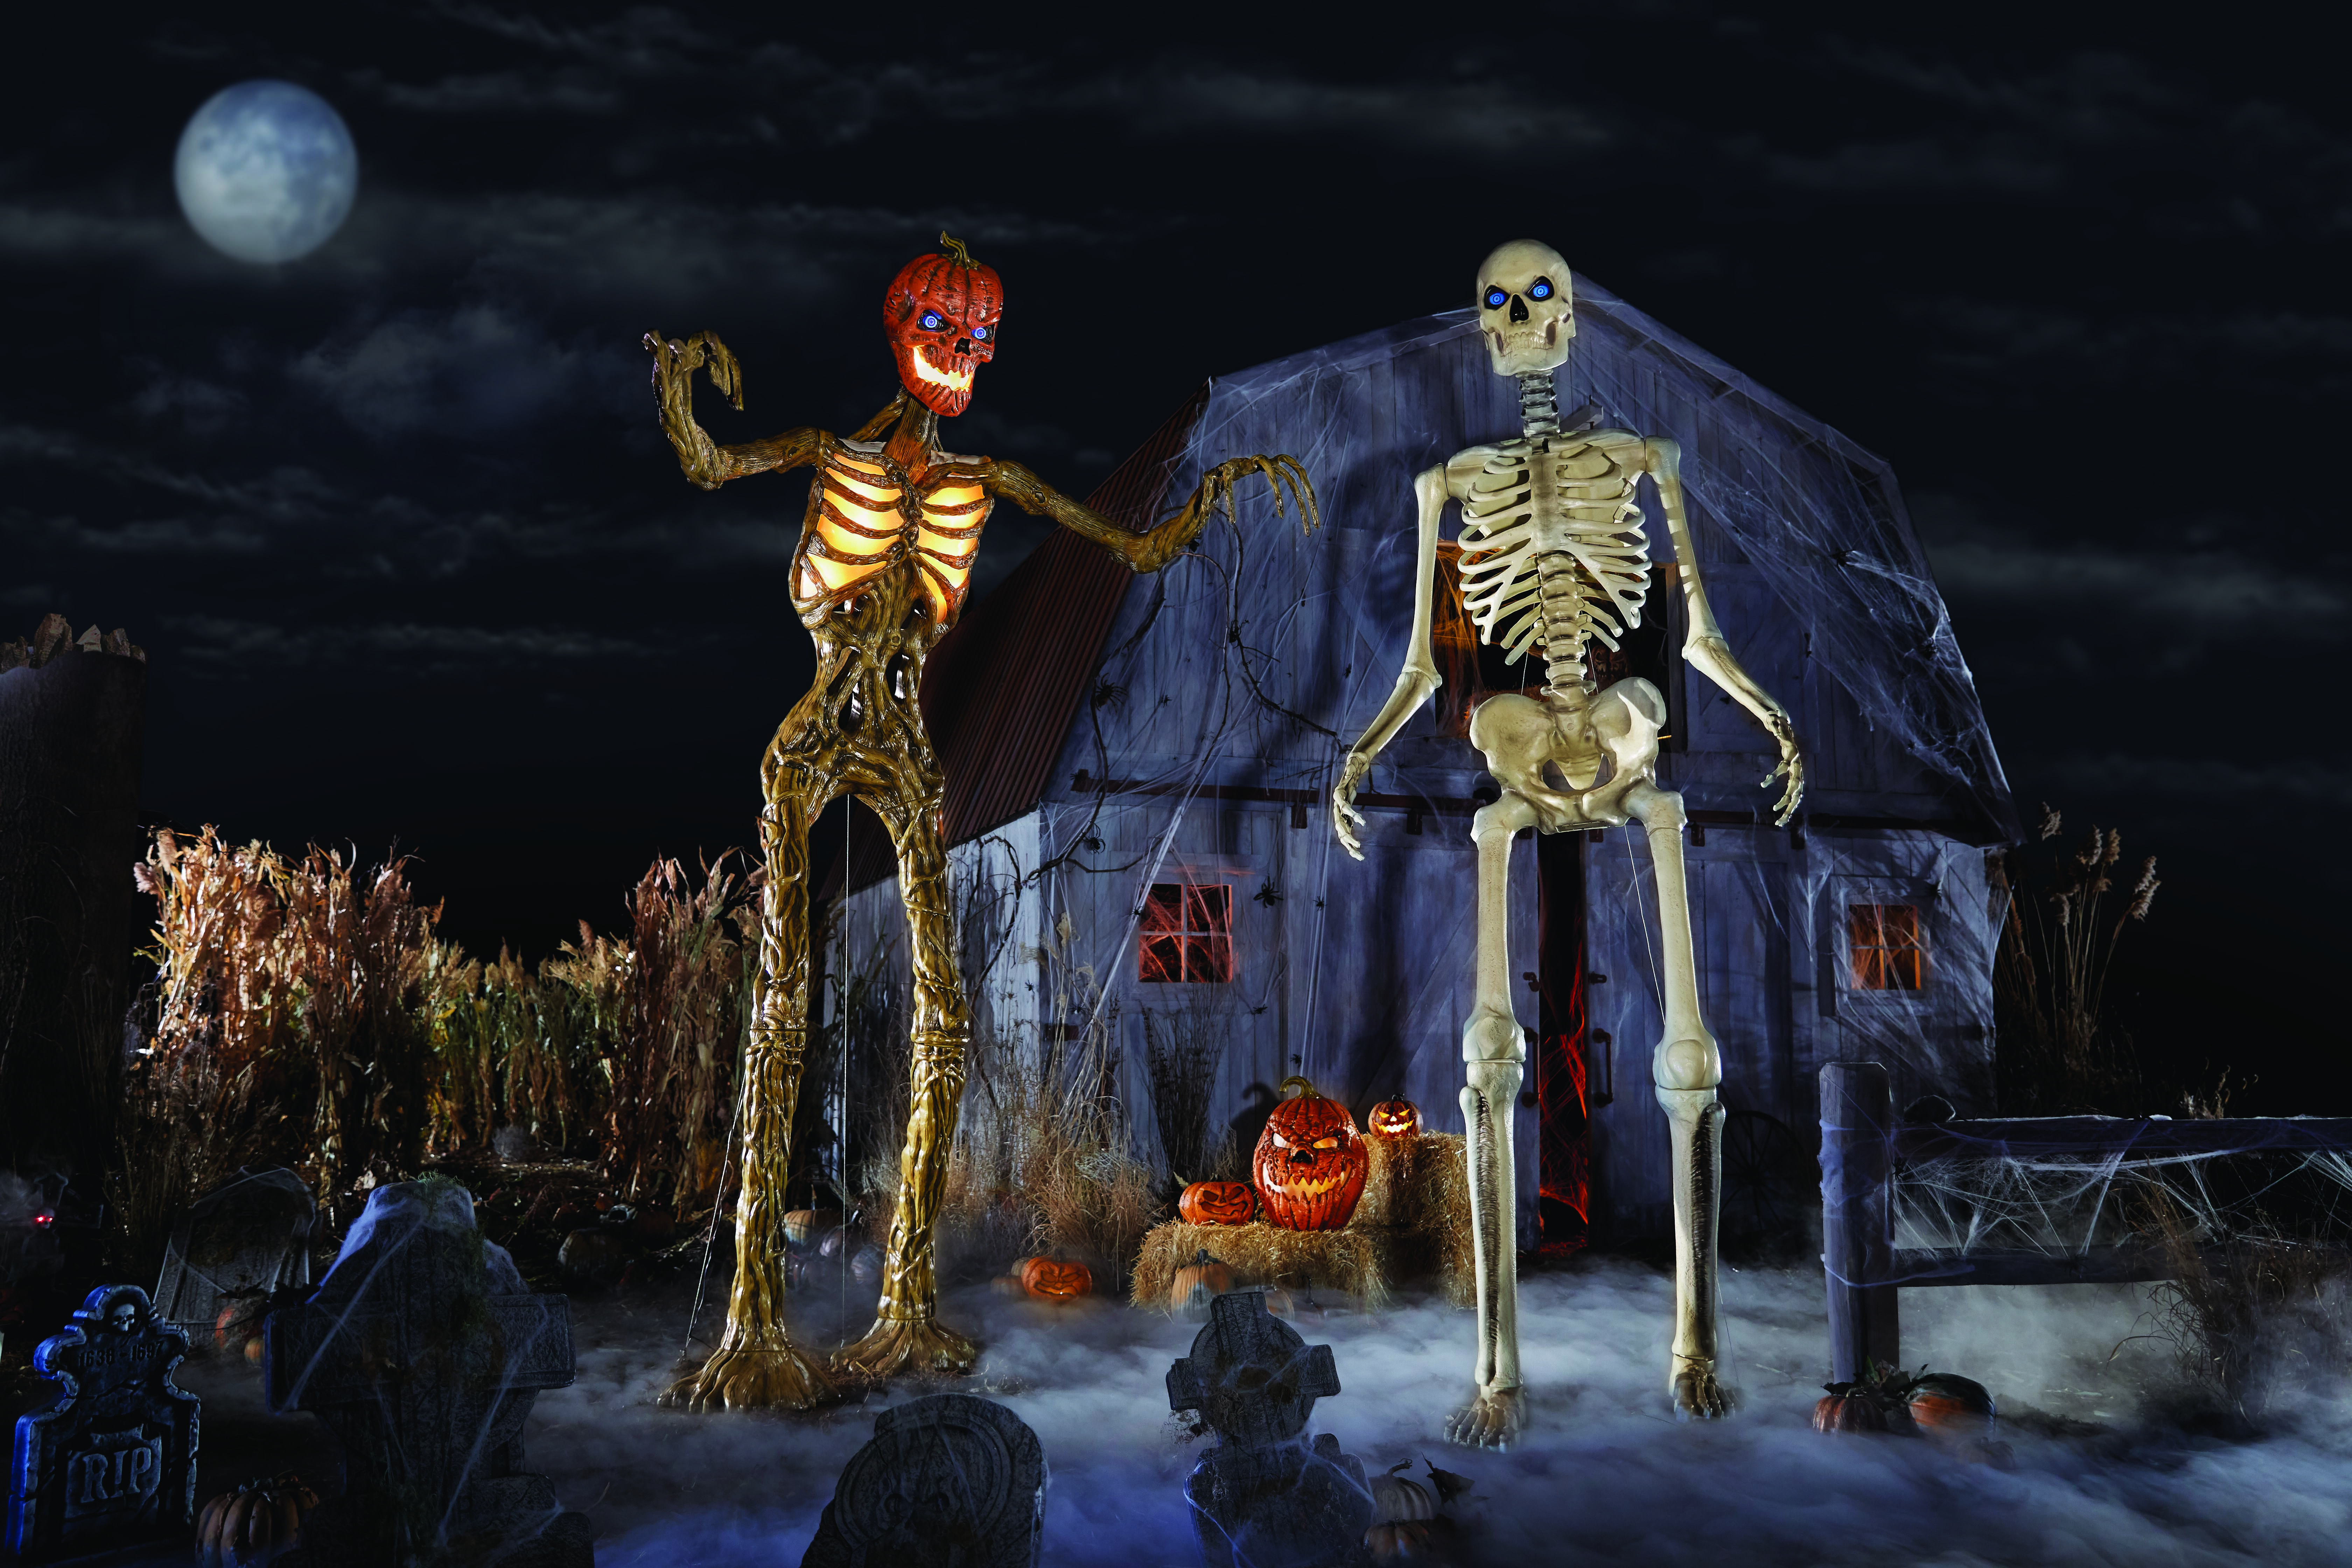 Skeleton Hand And Leg Elements Set For Halloween Stock